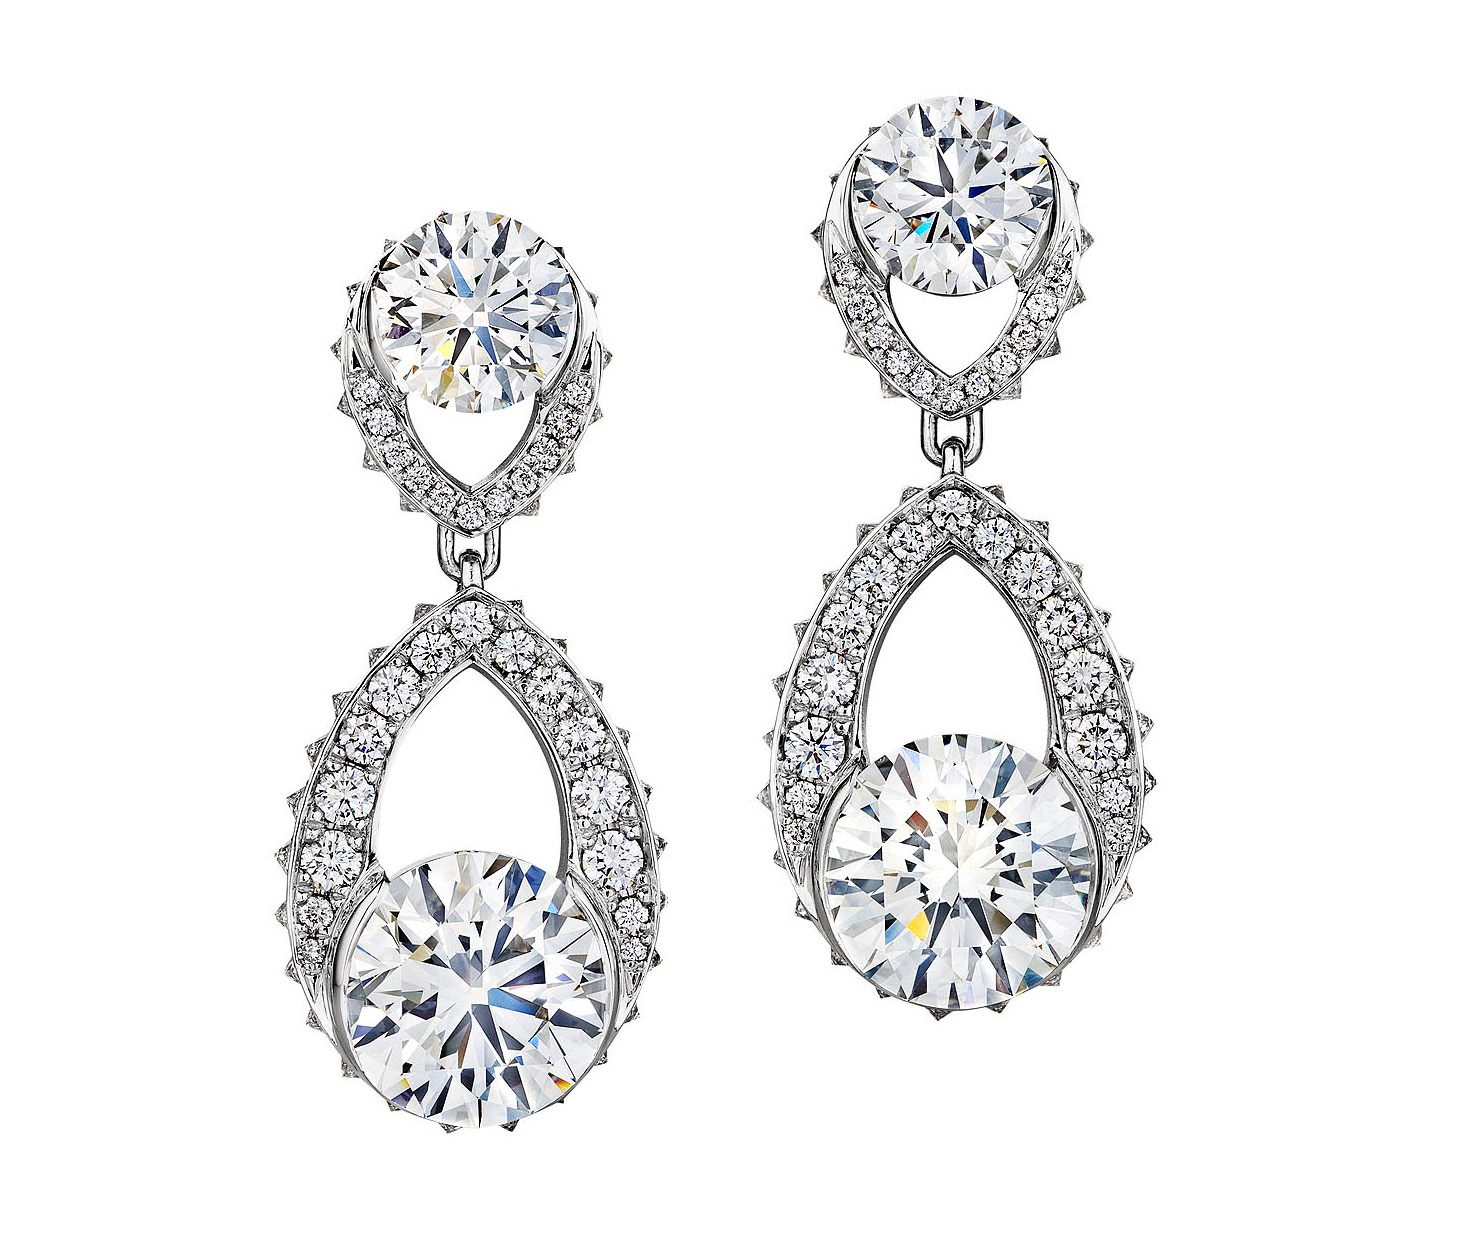 Arabesque Diamond Earrings by Geoffrey Good 194 diamonds, at 7.92 tcw., set in 18K white gold